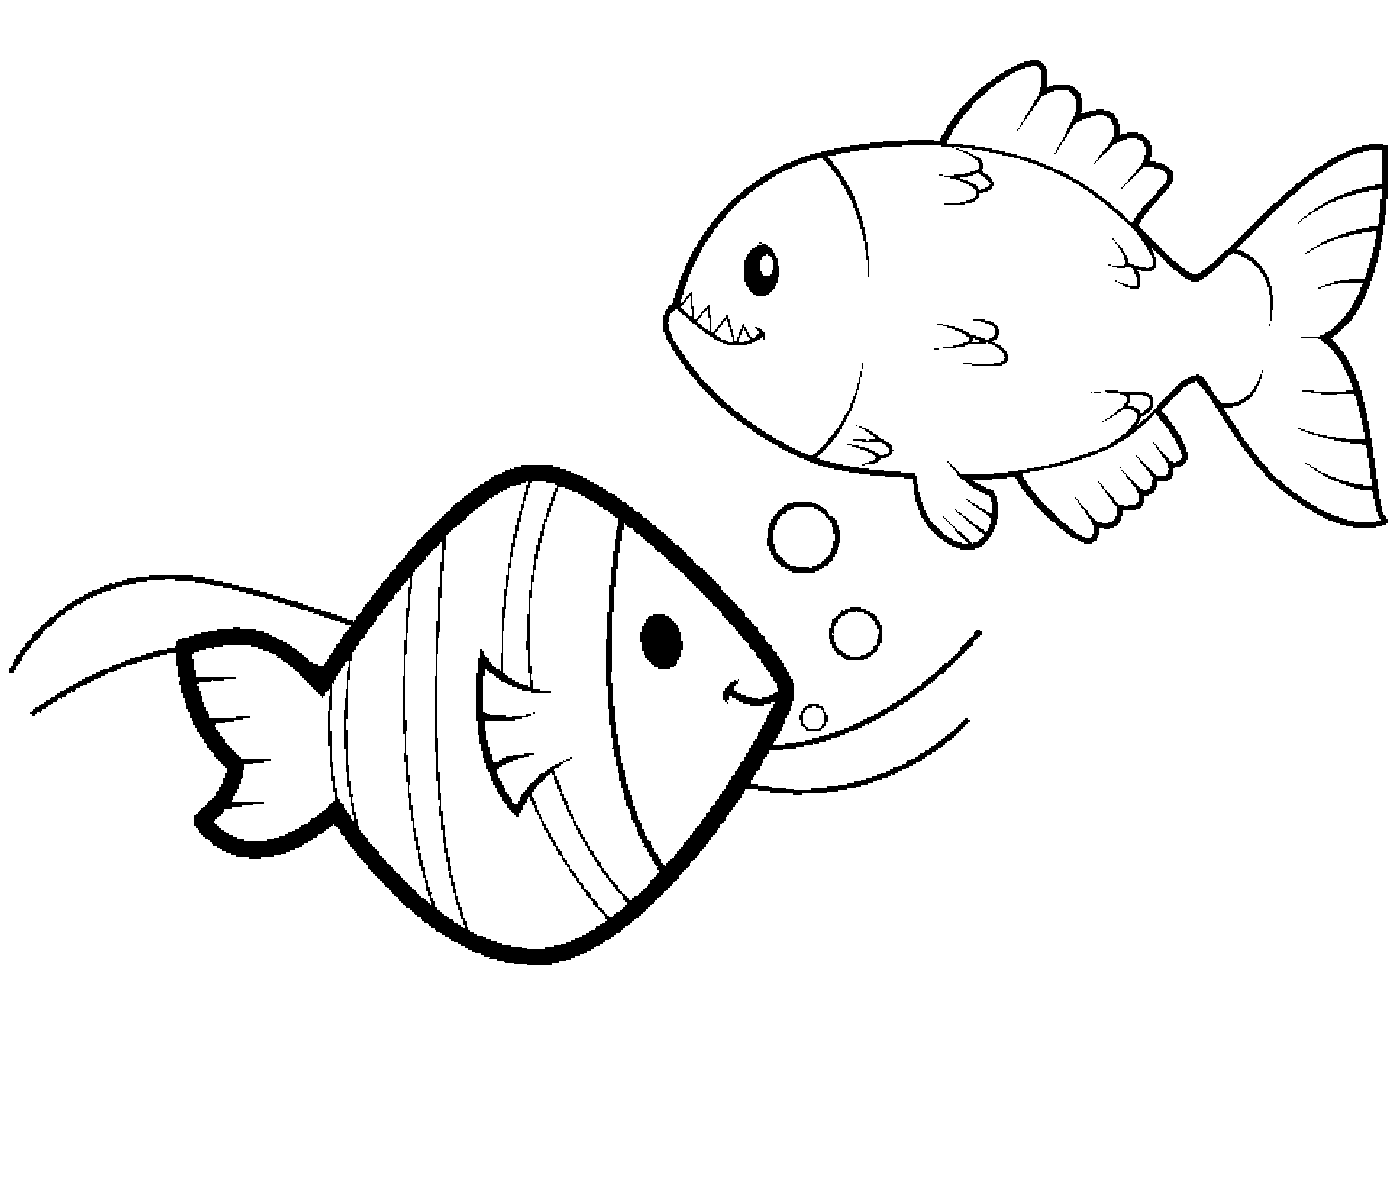 imagens de desenhos de peixes para colorir - Desenhos de Peixes para colorir jogos de pintar e imprimir